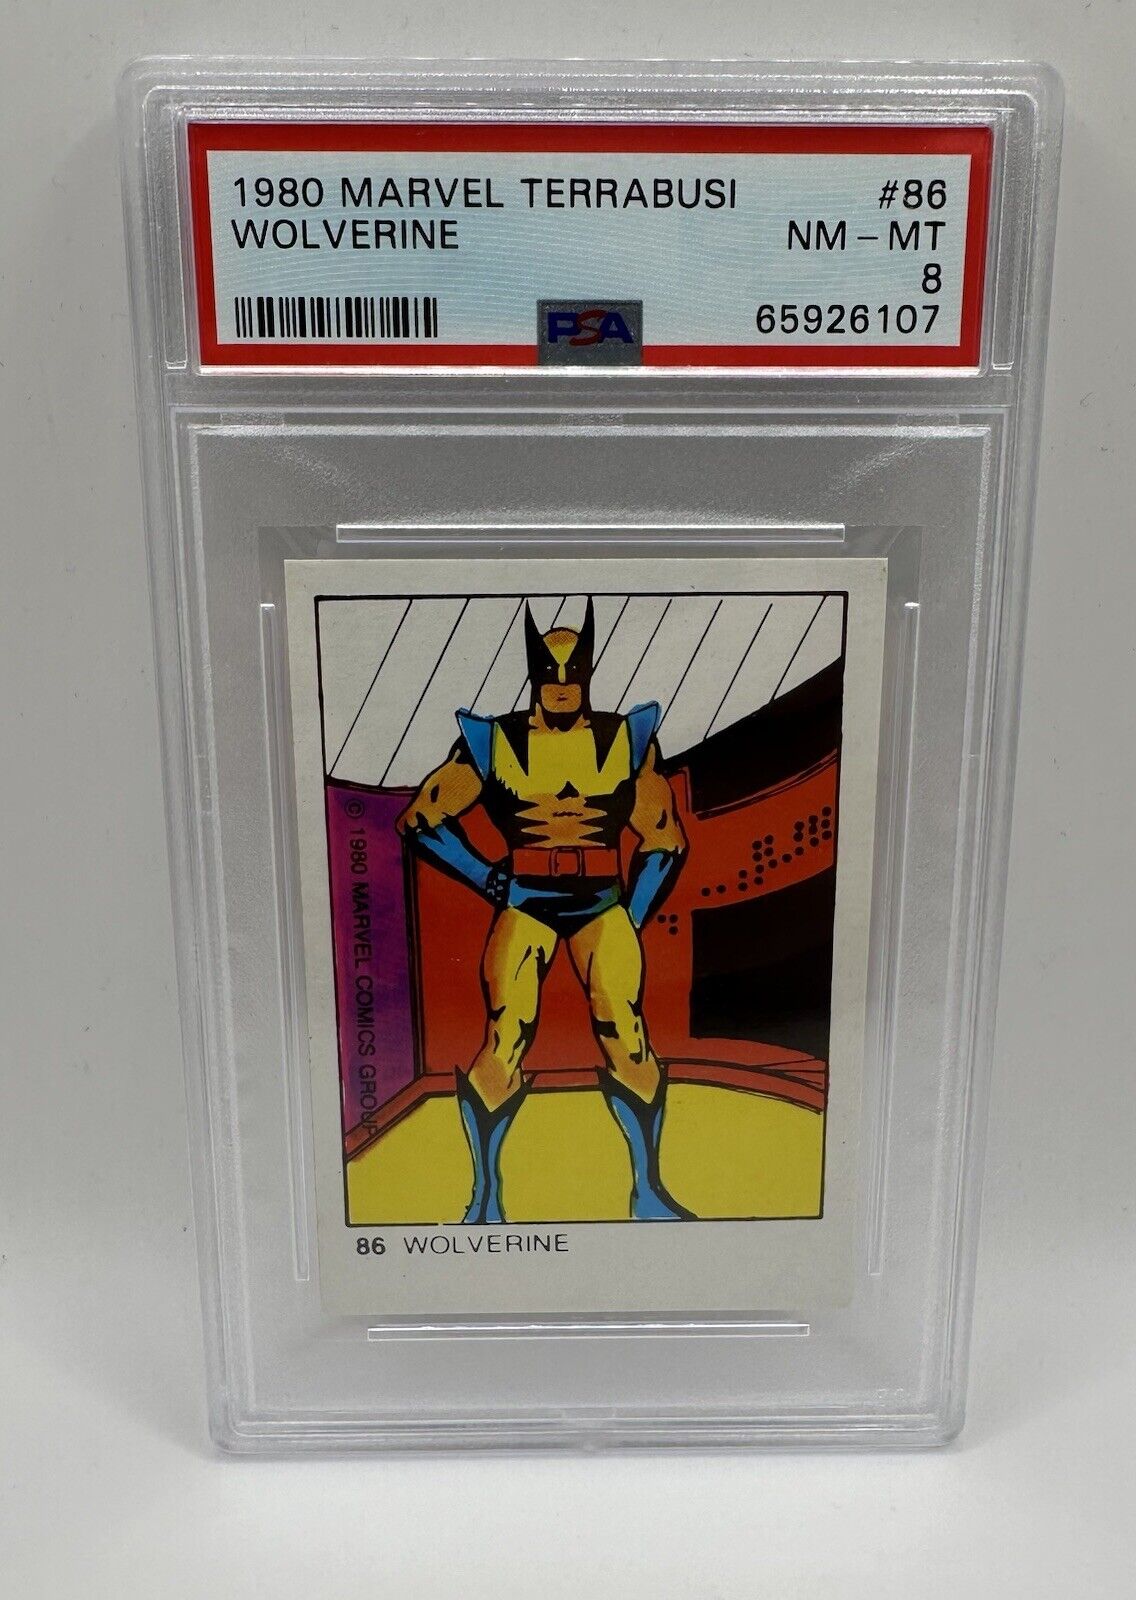 1980 Marvel Terrabusi #86 Wolverine PSA 8 - ROOKIE CARD Iconic